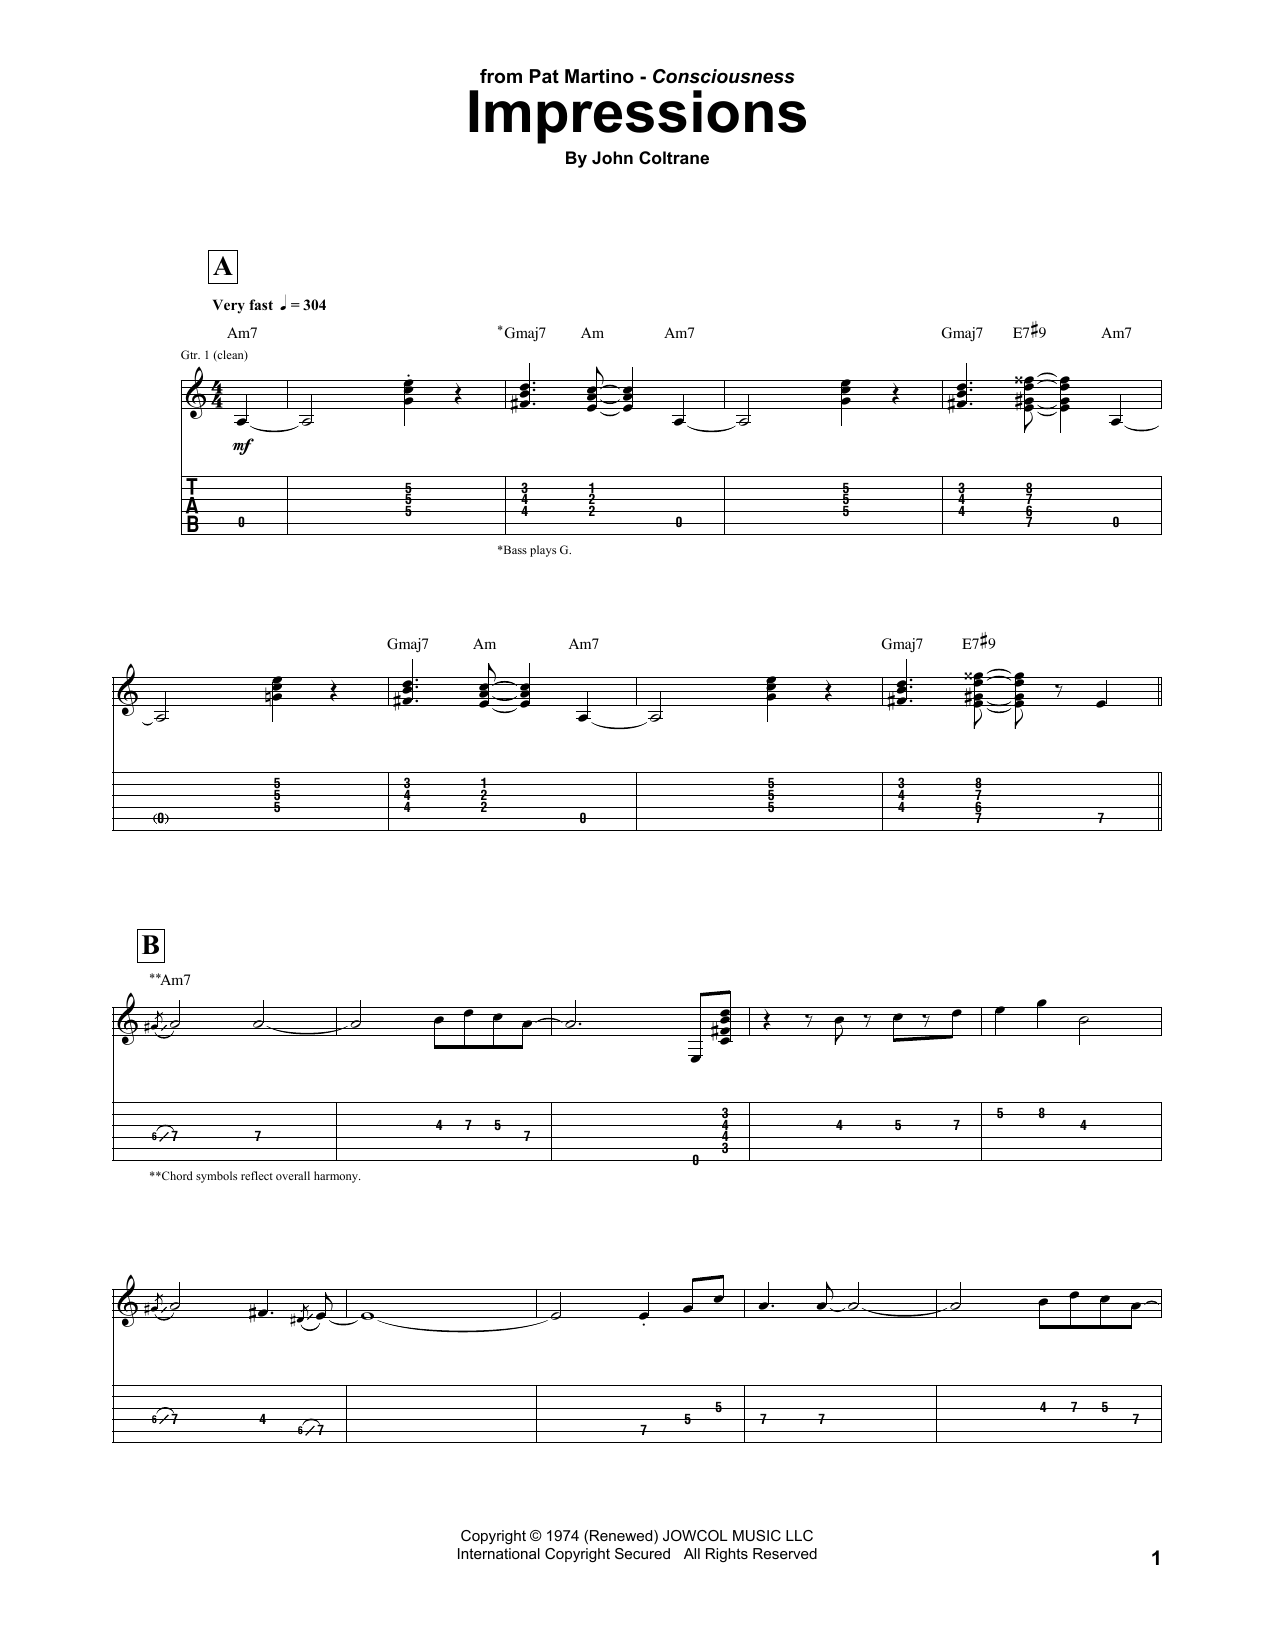 Pat Martino Impressions Sheet Music Notes & Chords for Guitar Tab - Download or Print PDF